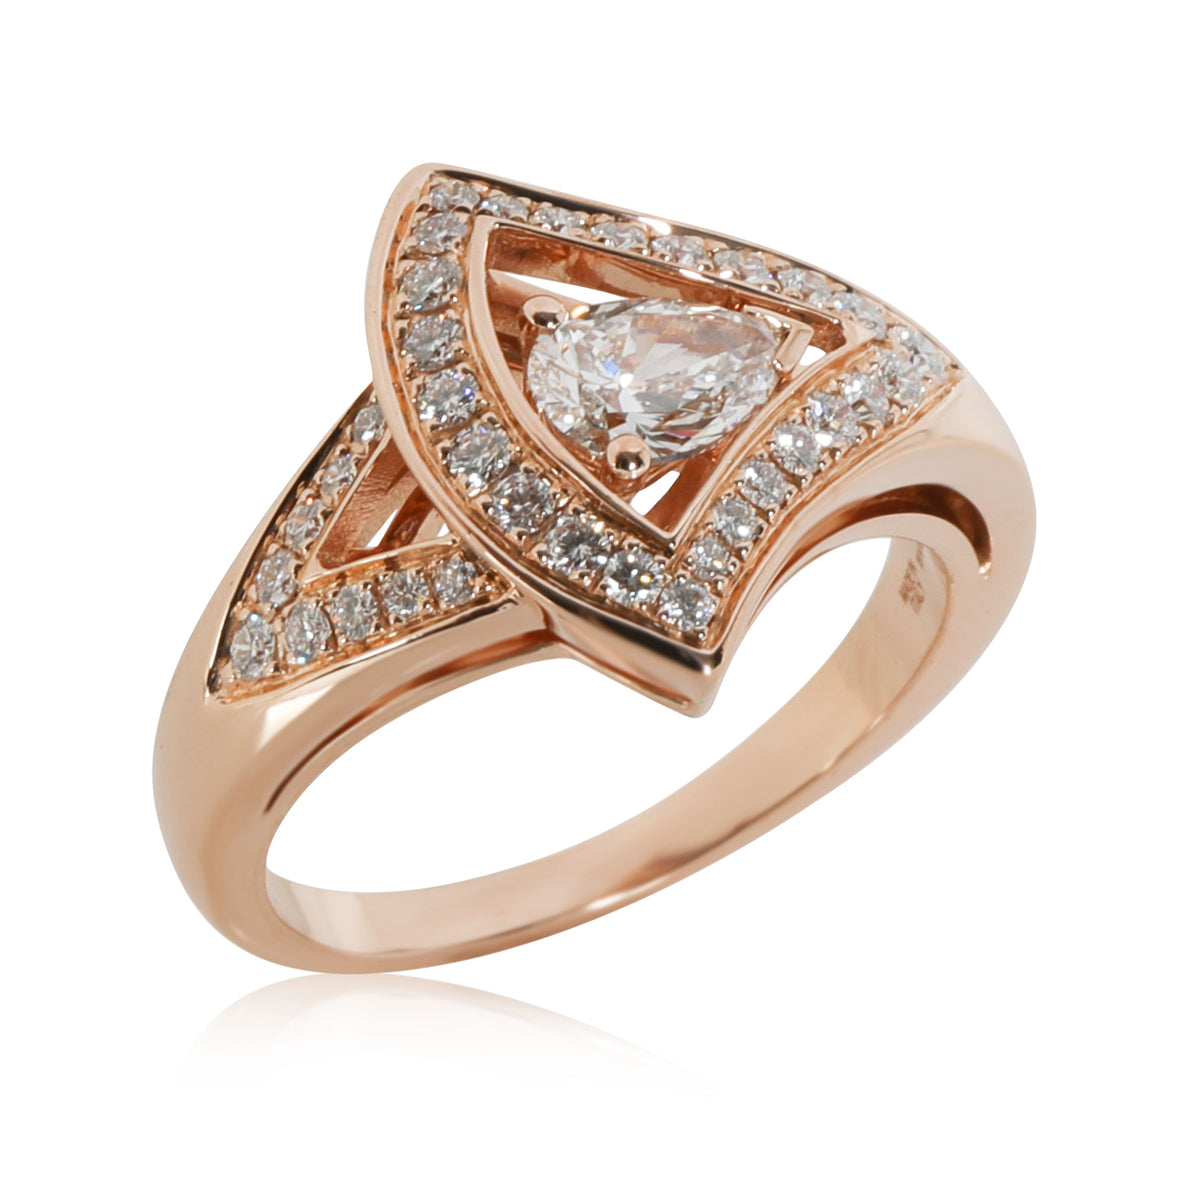 Bvlgari Diva's Dream Diamond Ring in 18k Rose Gold 0.67 CTW